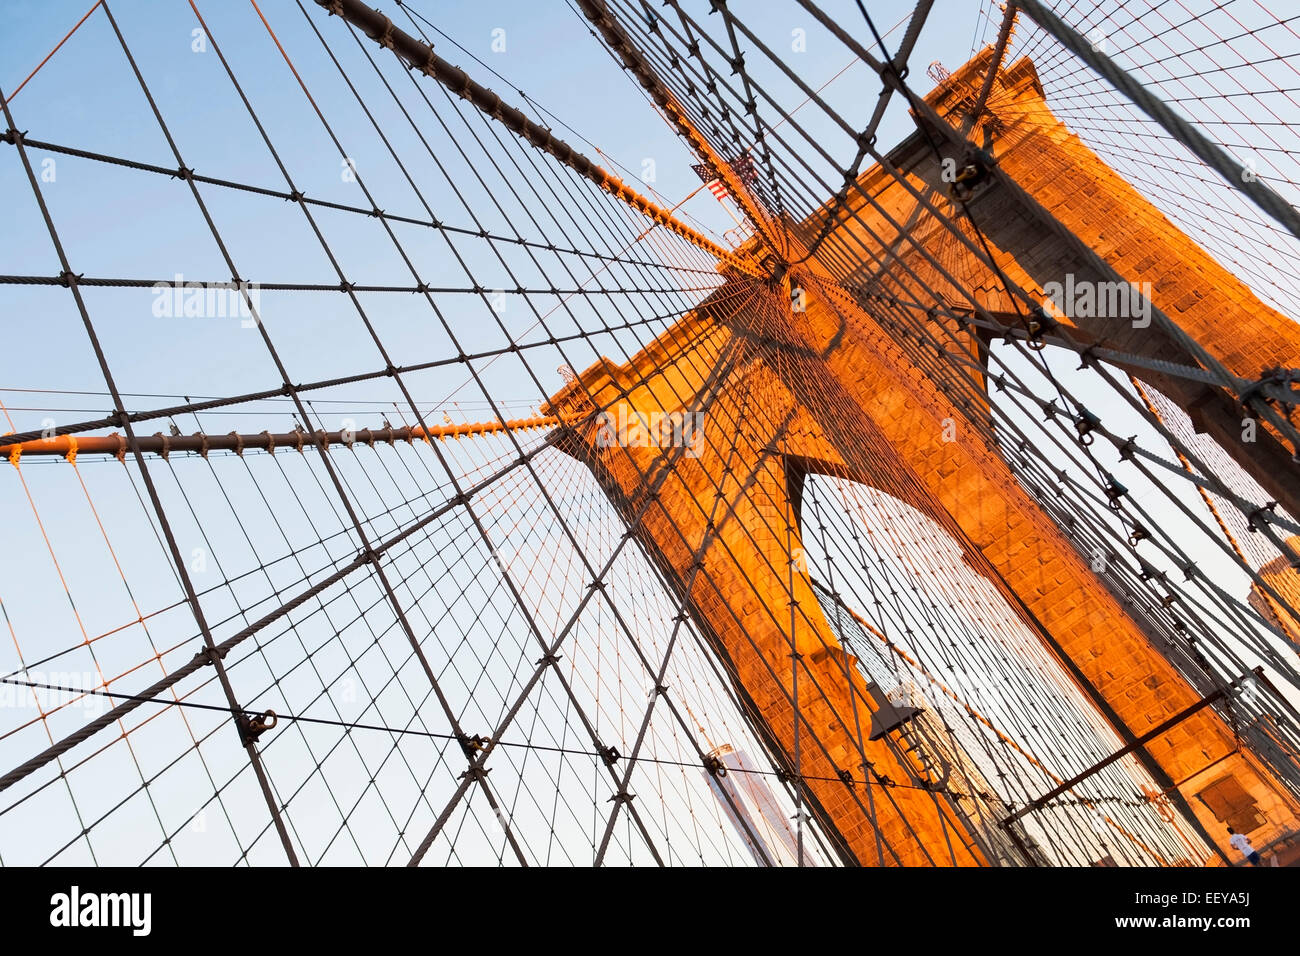 USA, New York State, New York City, Low angle view of Brooklyn Bridge Stock Photo